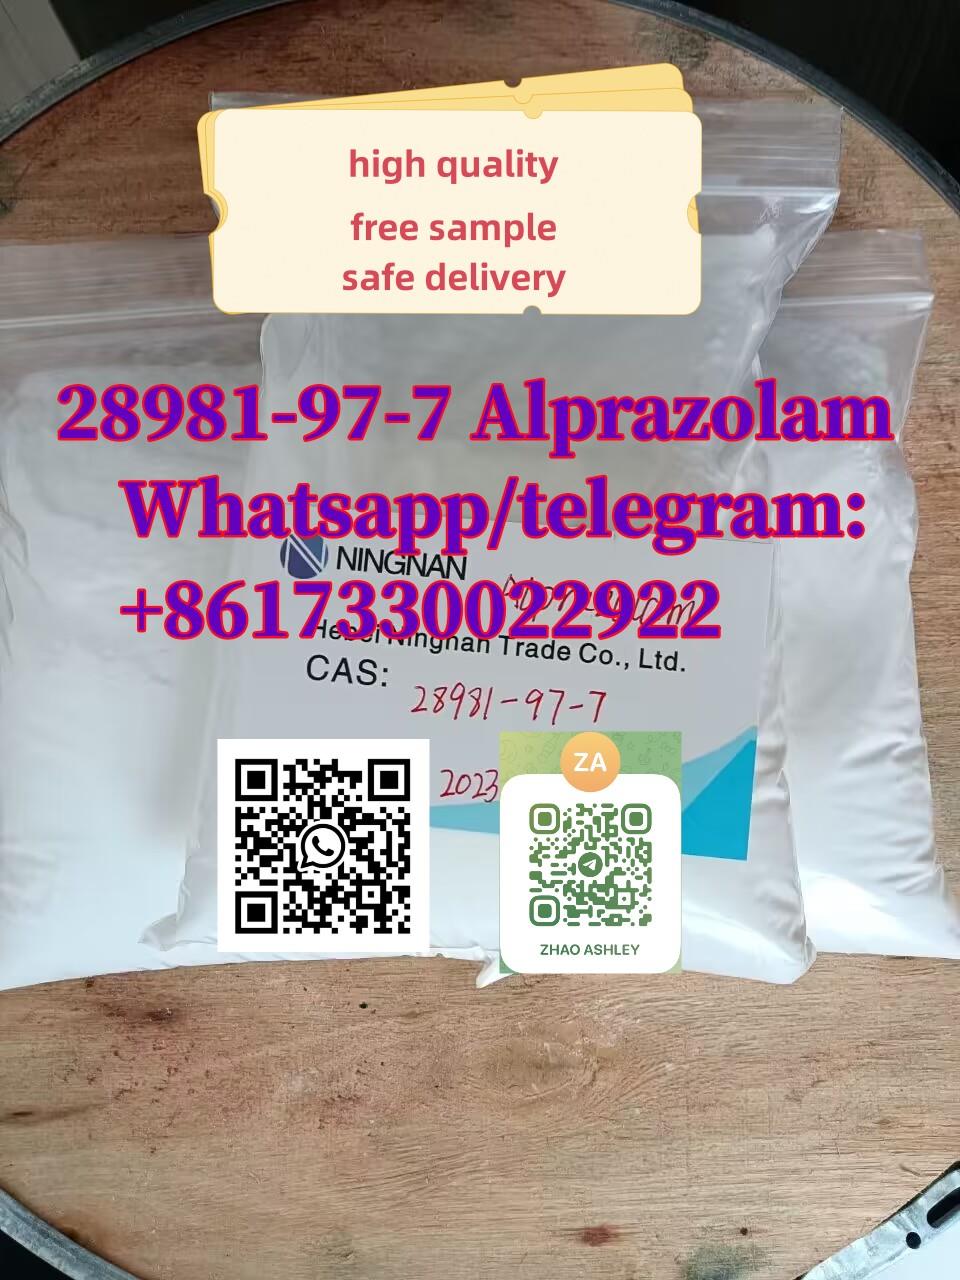 28981-97-7 Alprazolam Factory wholesale supply, competitive price!,28981-97-7 Alprazolam,ningnan,Logistics and Transportation/Aviation